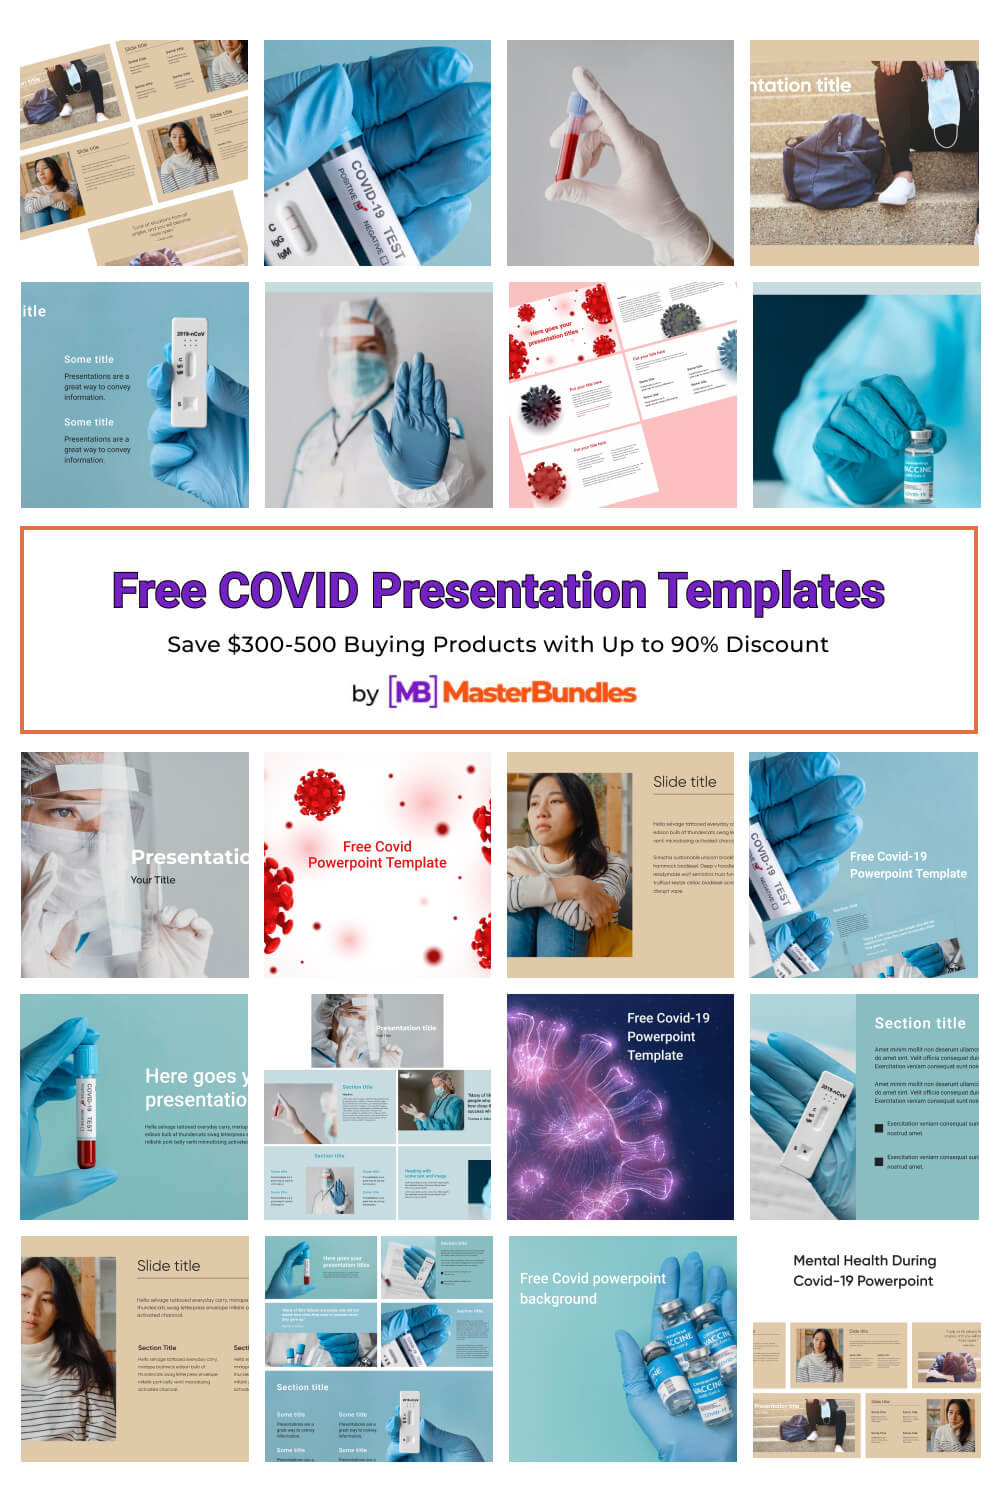 free covid presentation templates pinterest image.